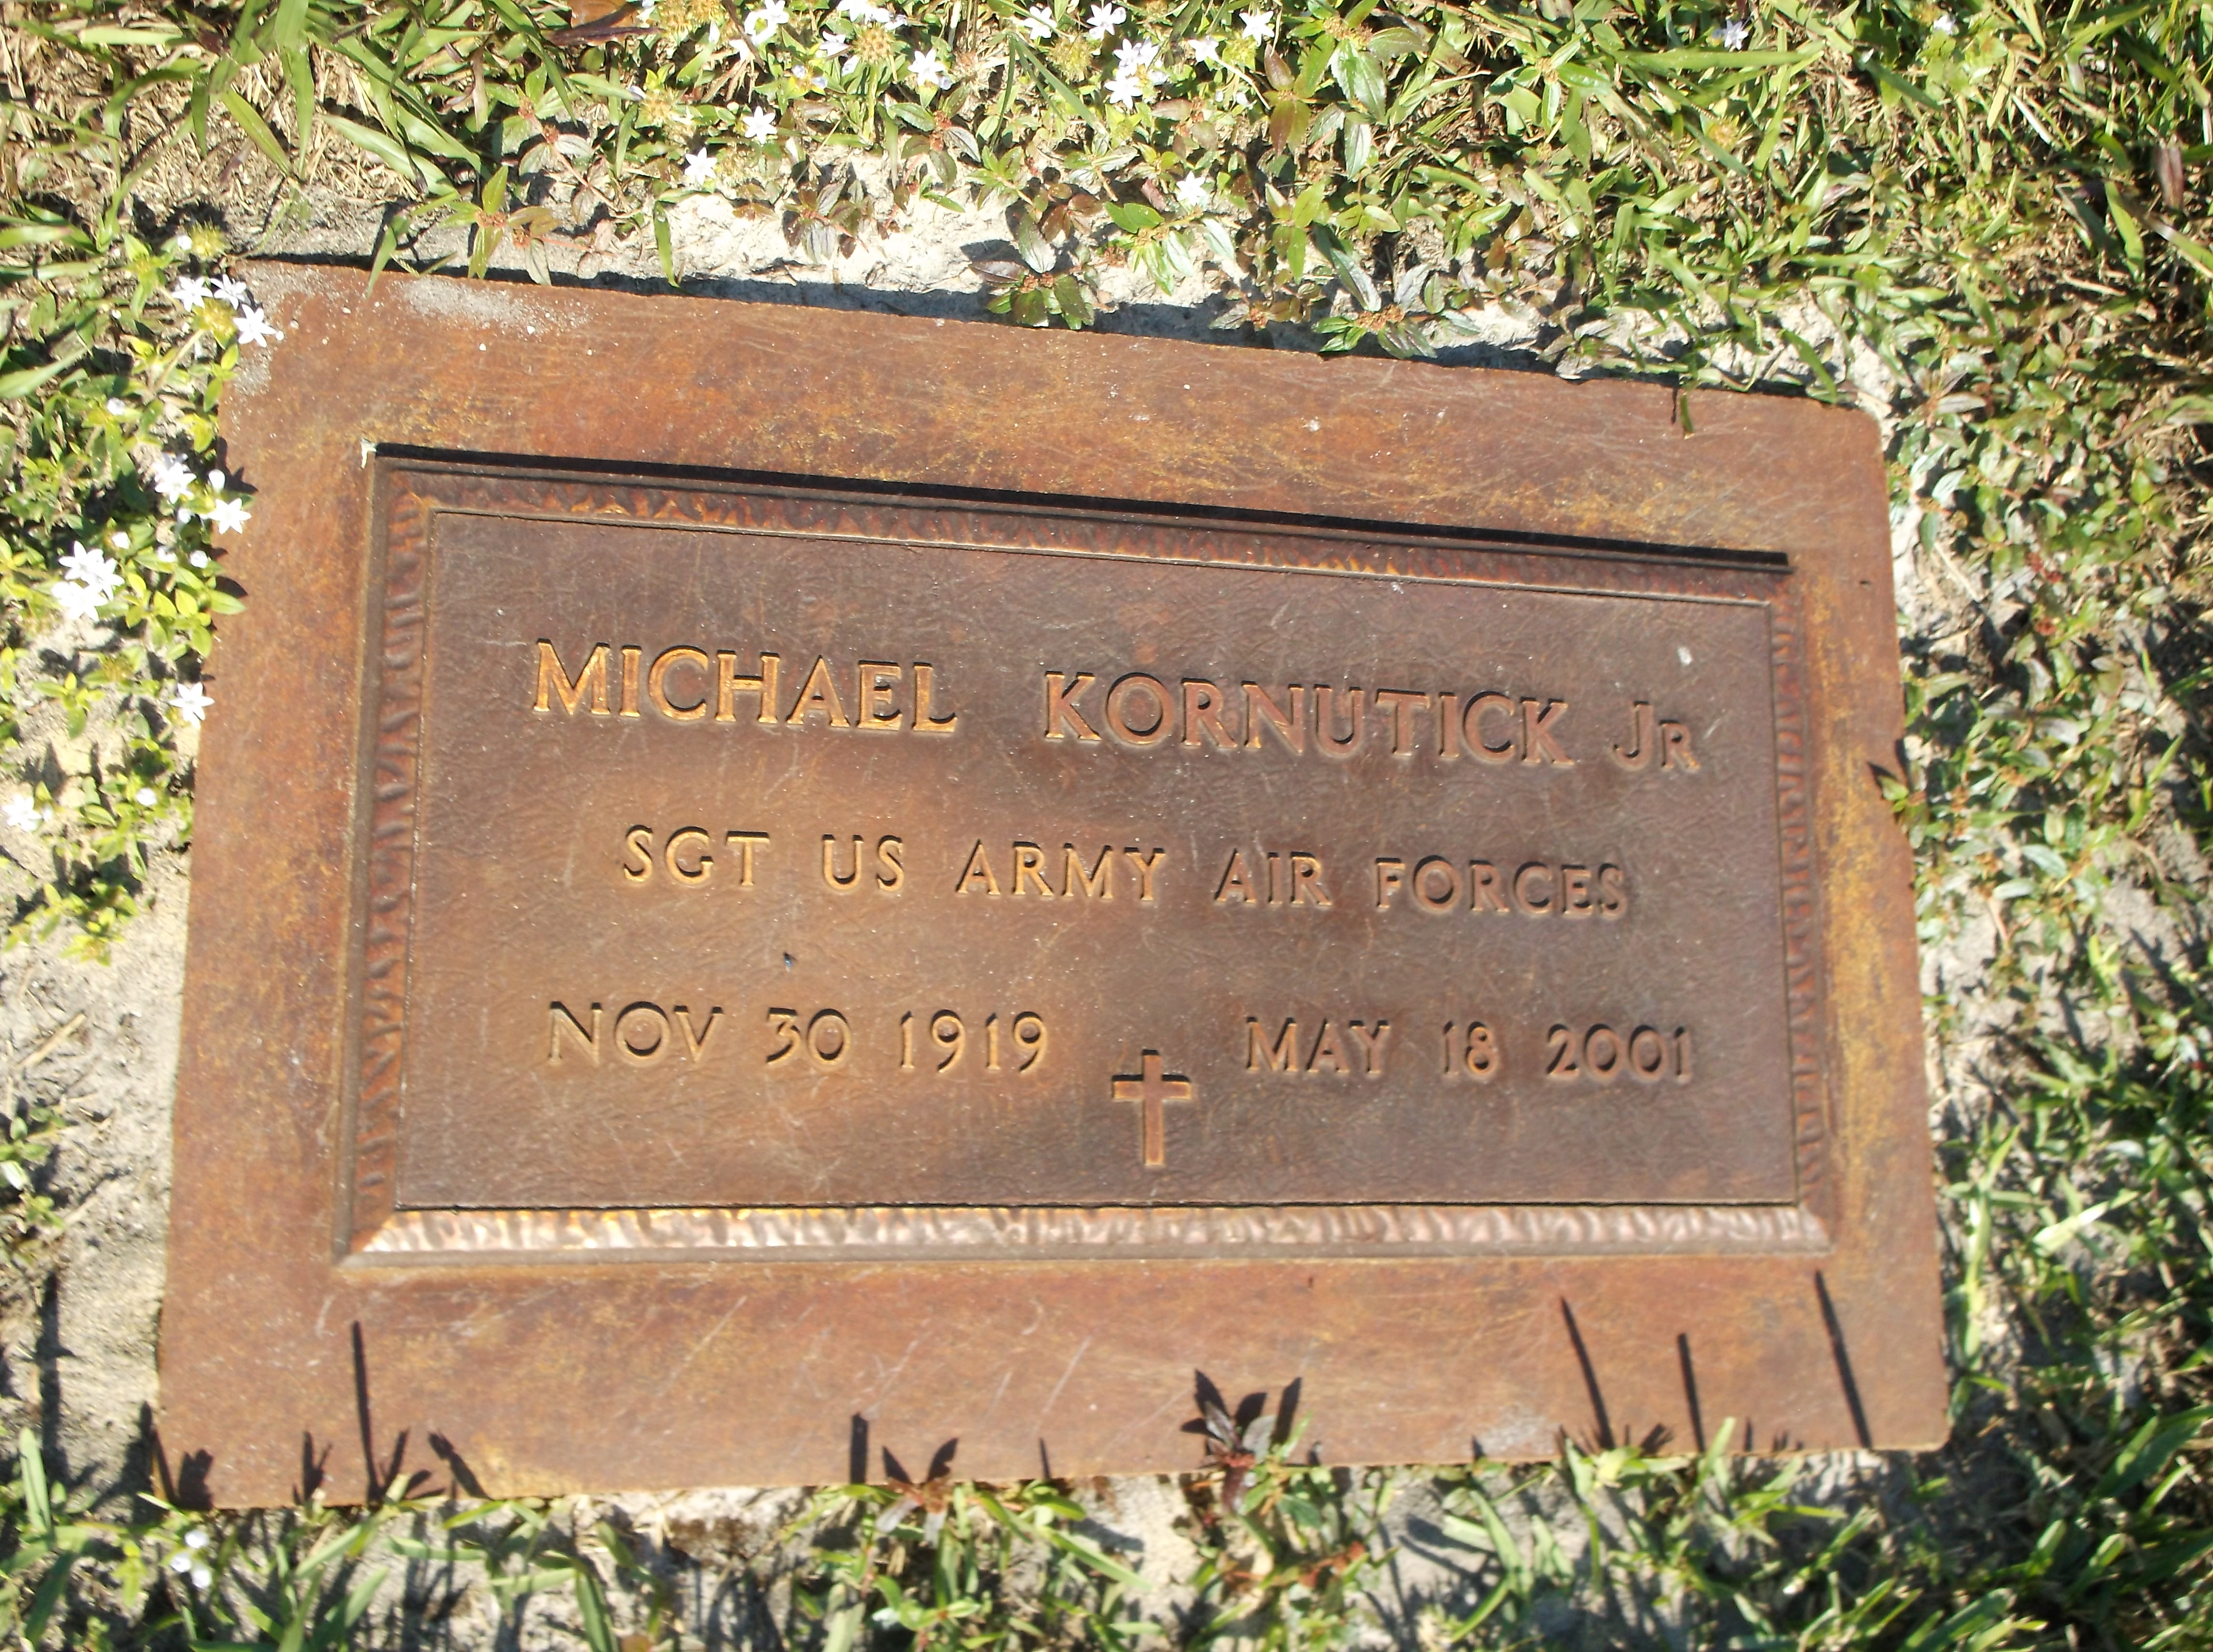 Michael Kornutick, Jr